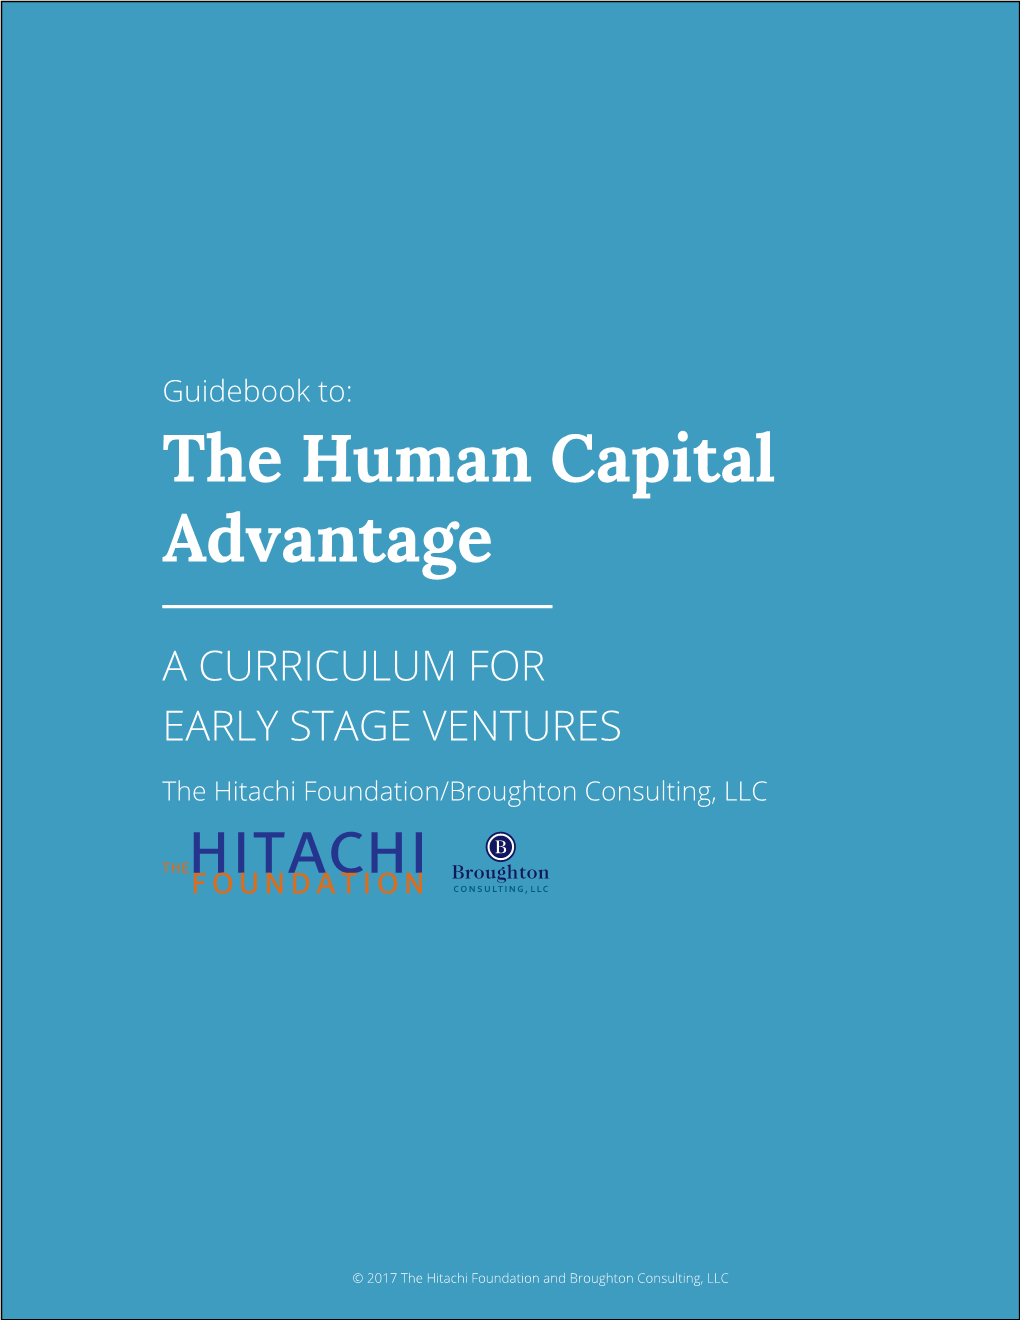 The Human Capital Advantage